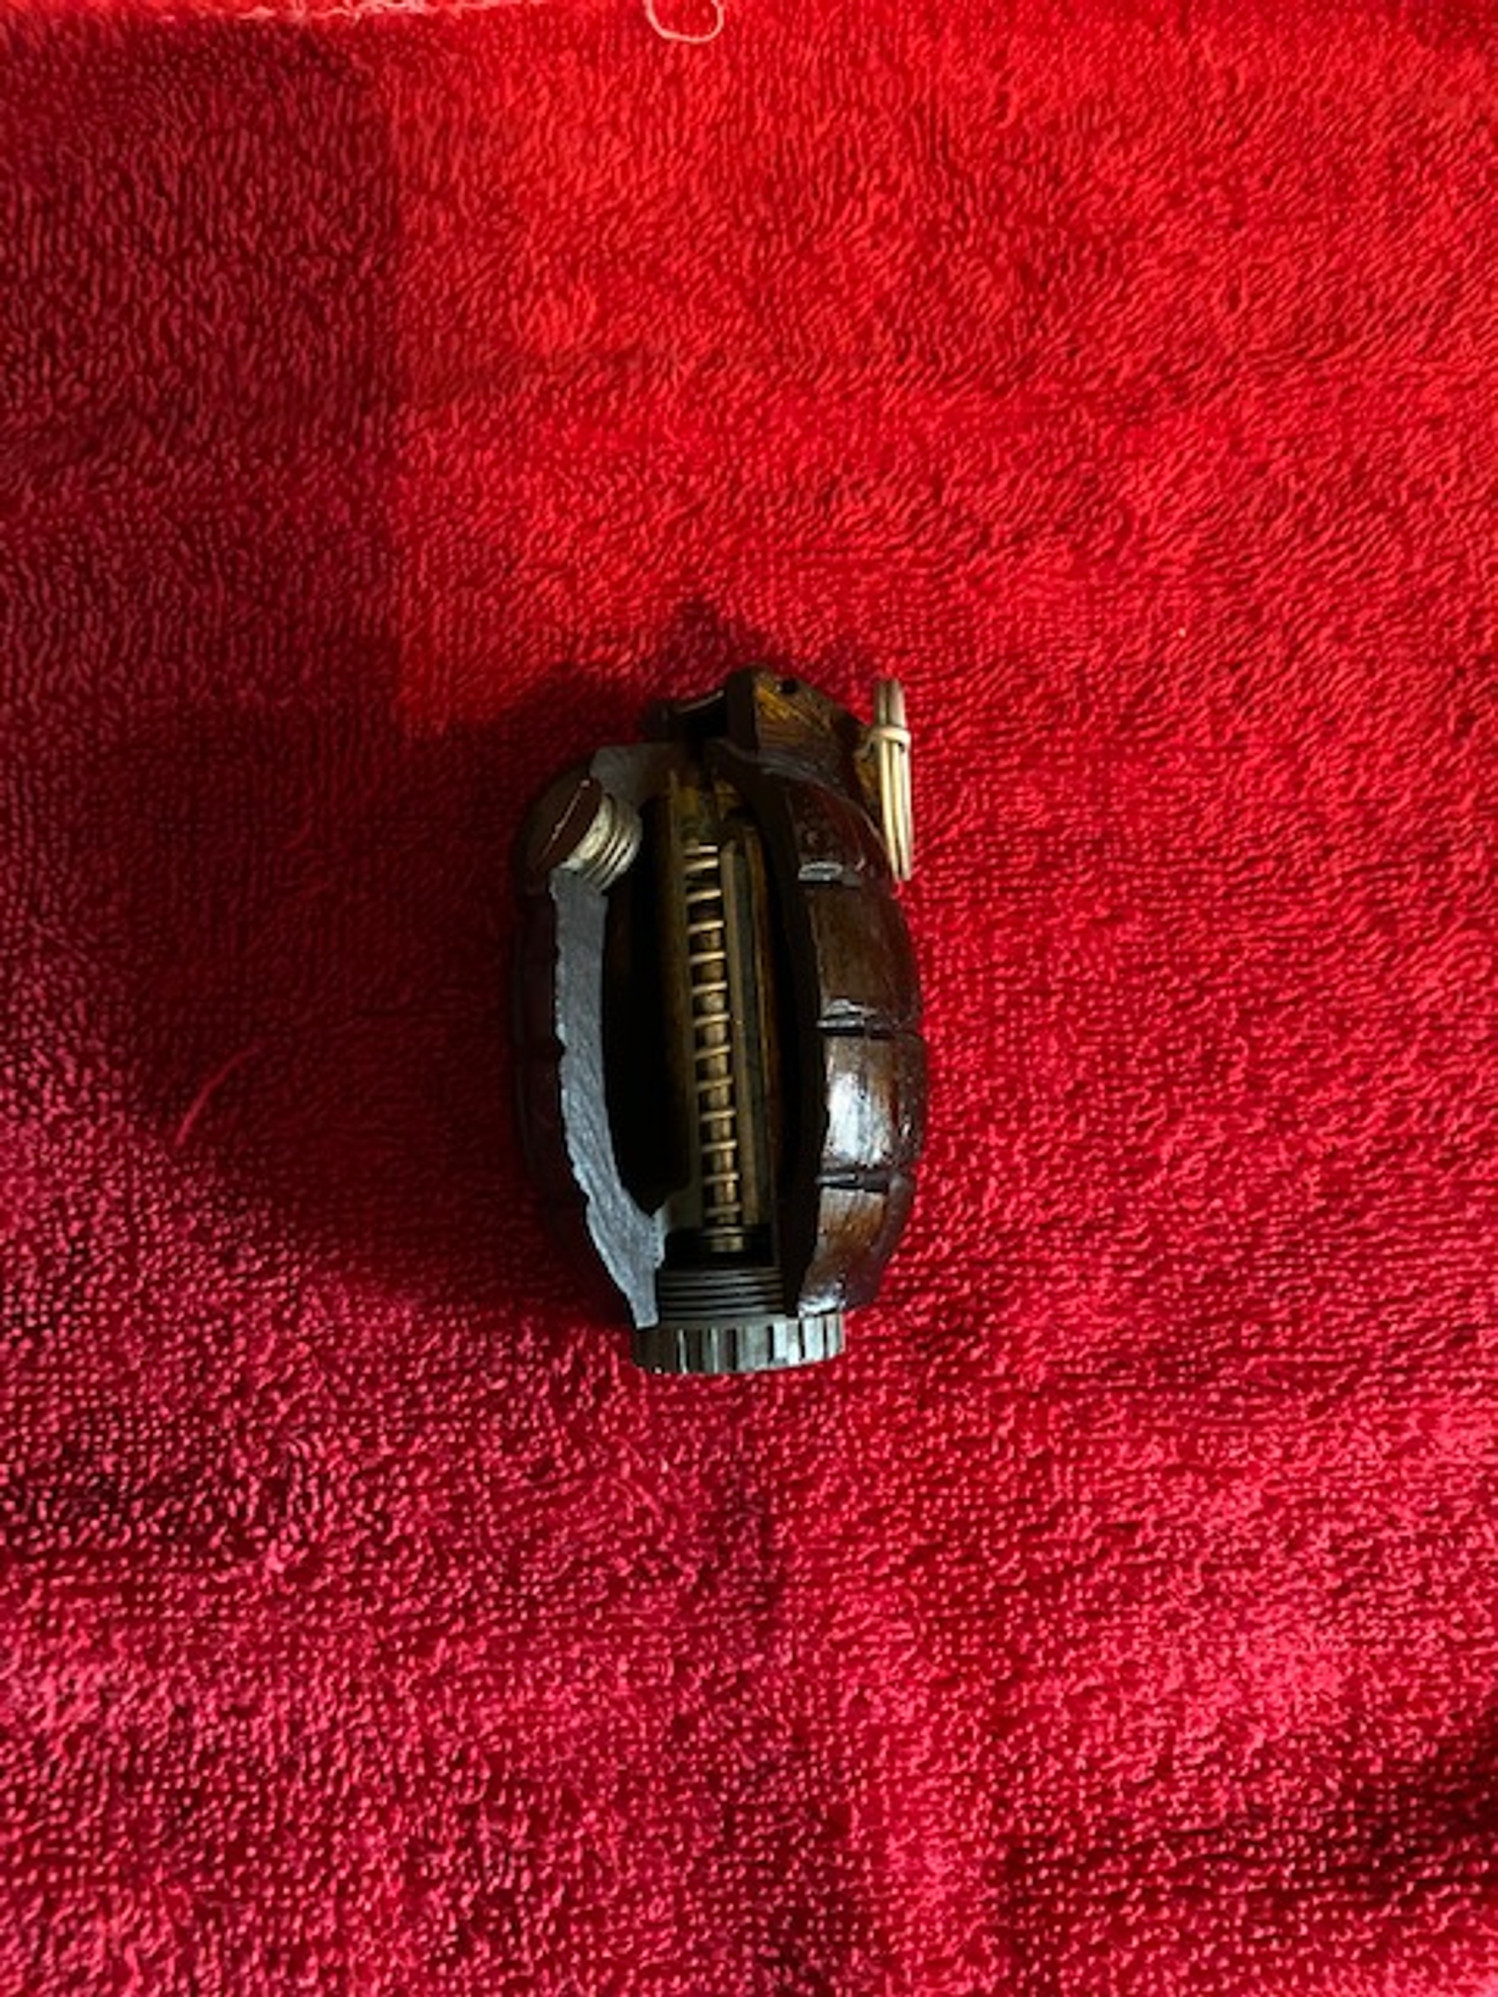 Mils No 36 Cutaway Grenade - Deactivated